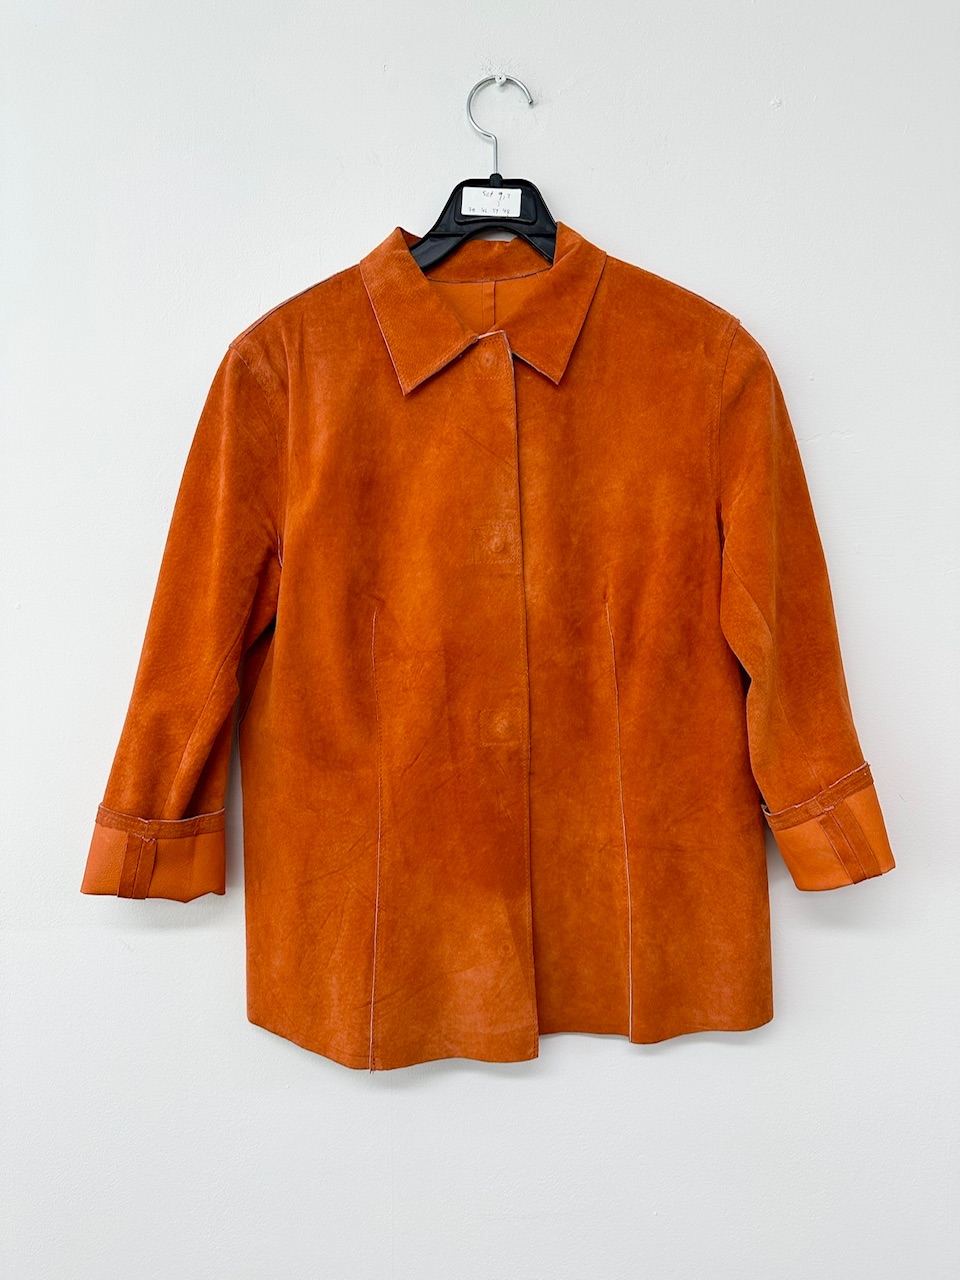 Orange real suede jacket shirt